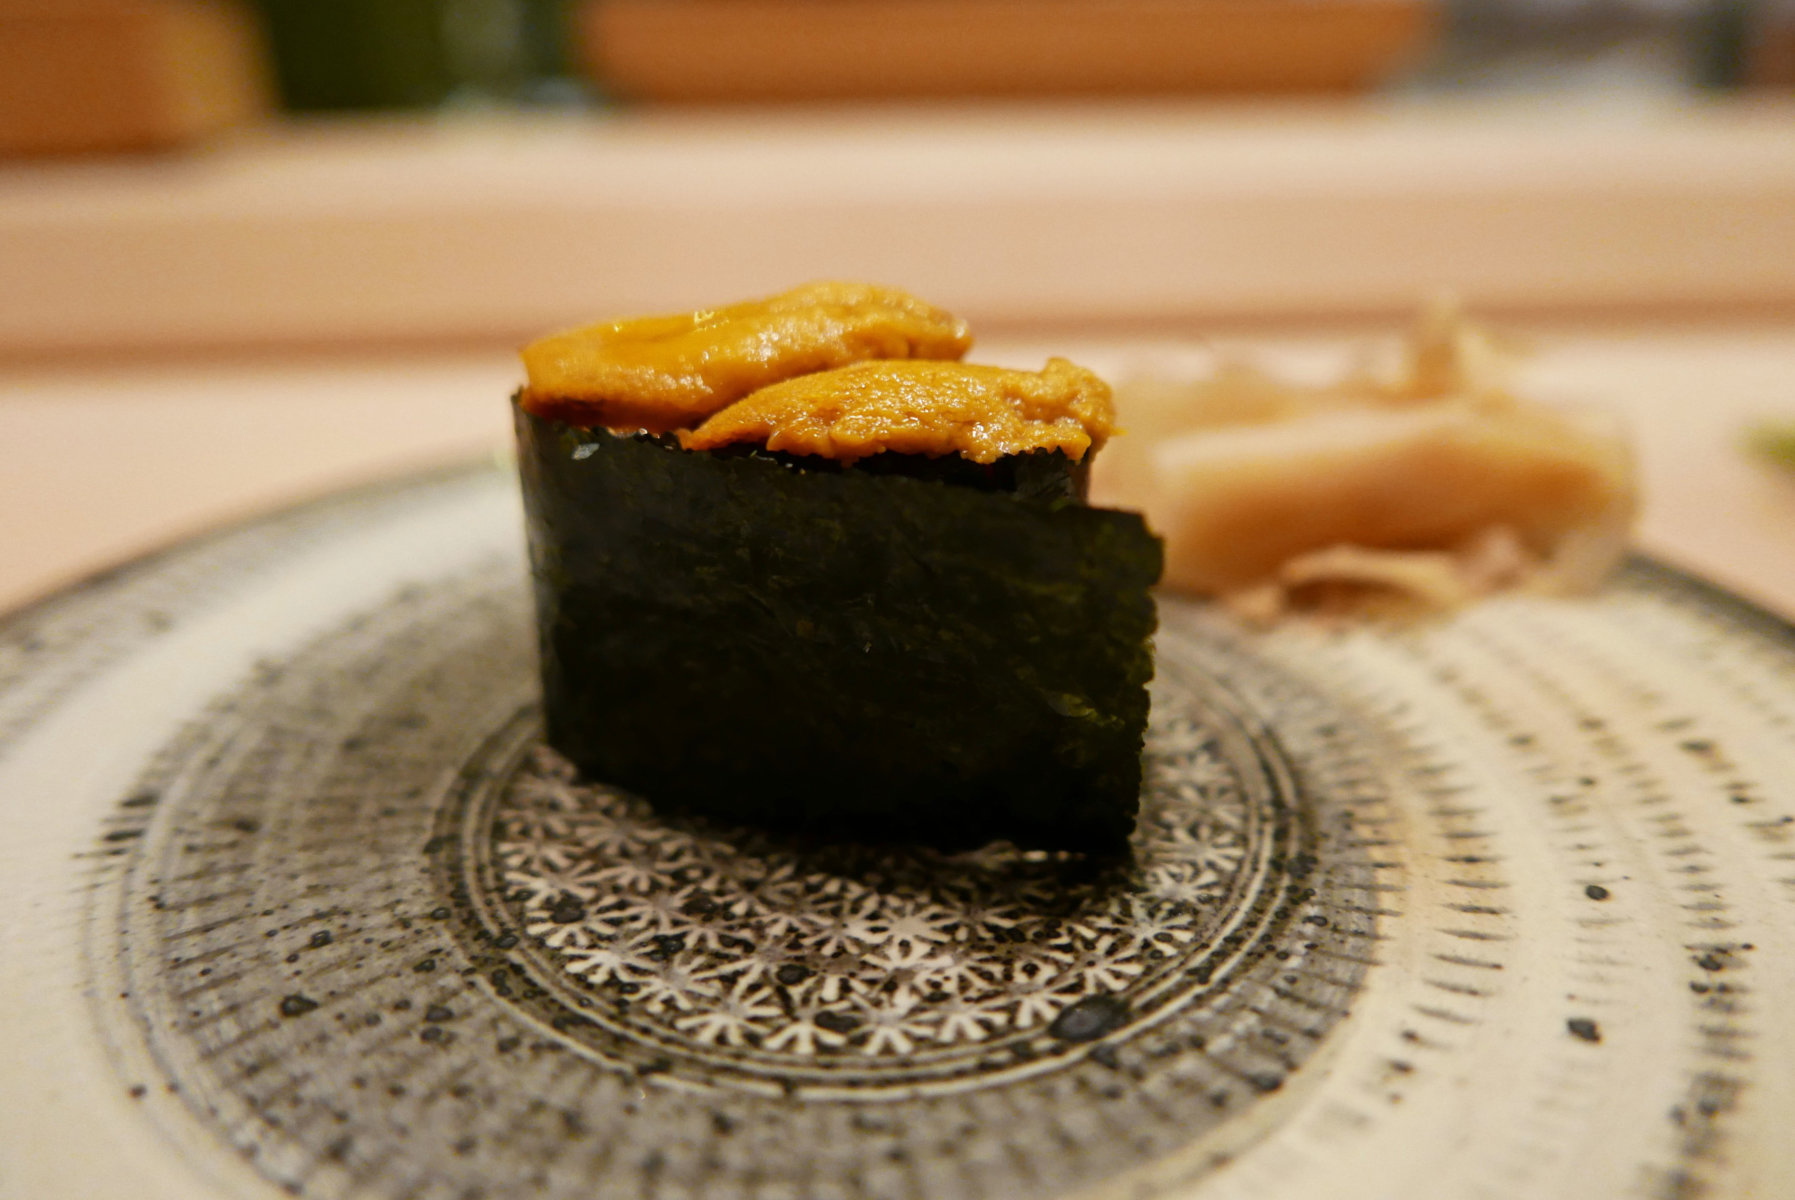 Two kinds of sea urchin, bafun and murasaki